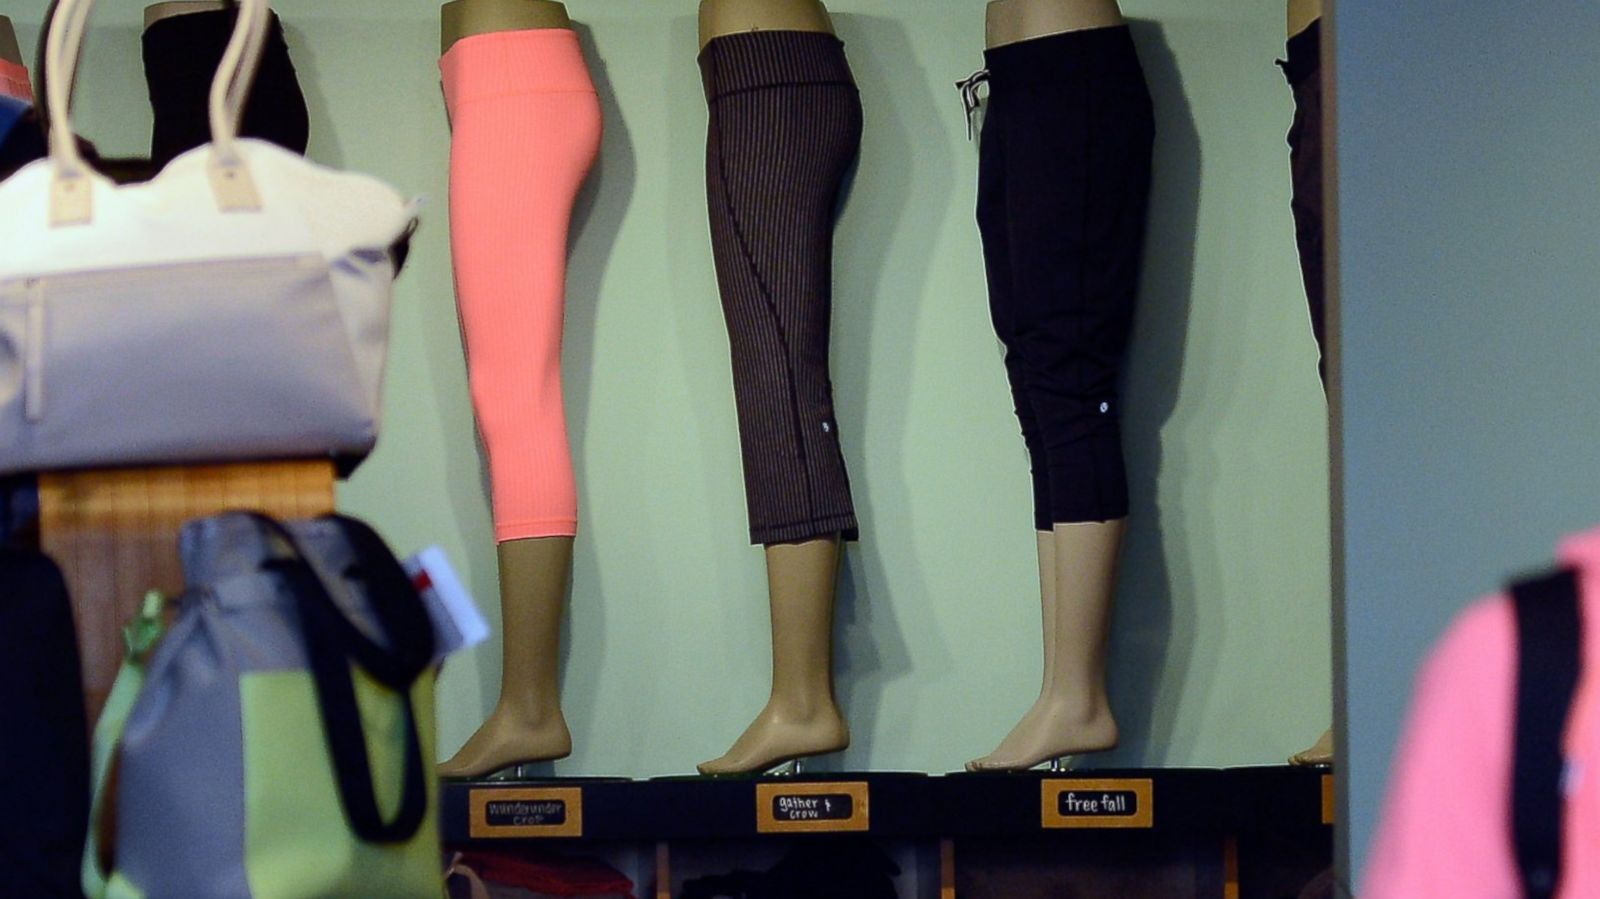 Lululemon Founder Chip Wilson Blames Women's Bodies for Yoga Pant Problems  - ABC News